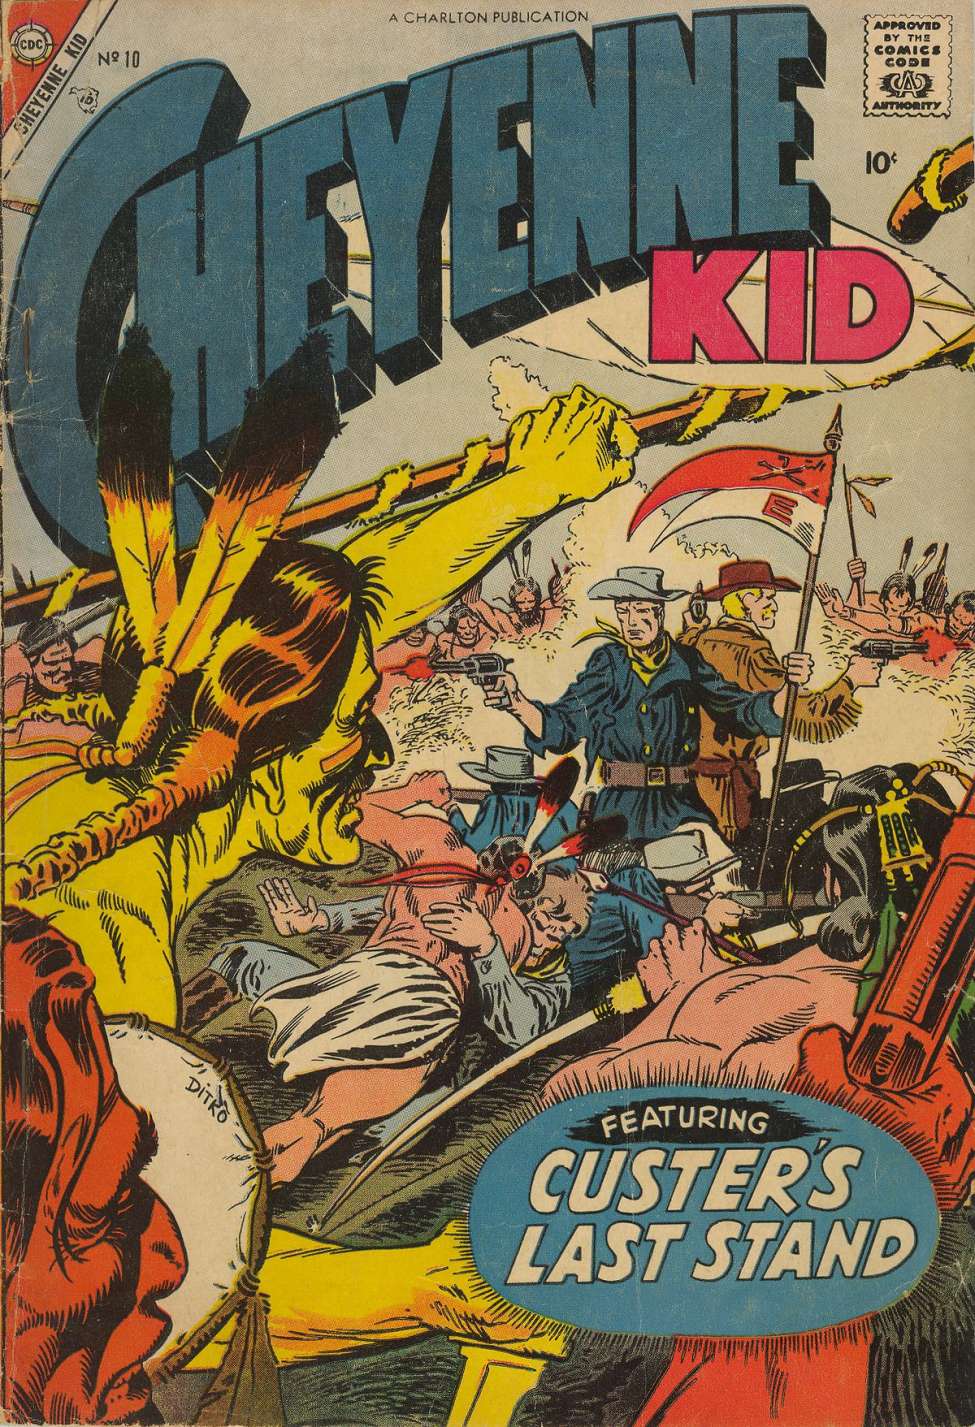 Comic Book Cover For Cheyenne Kid 10